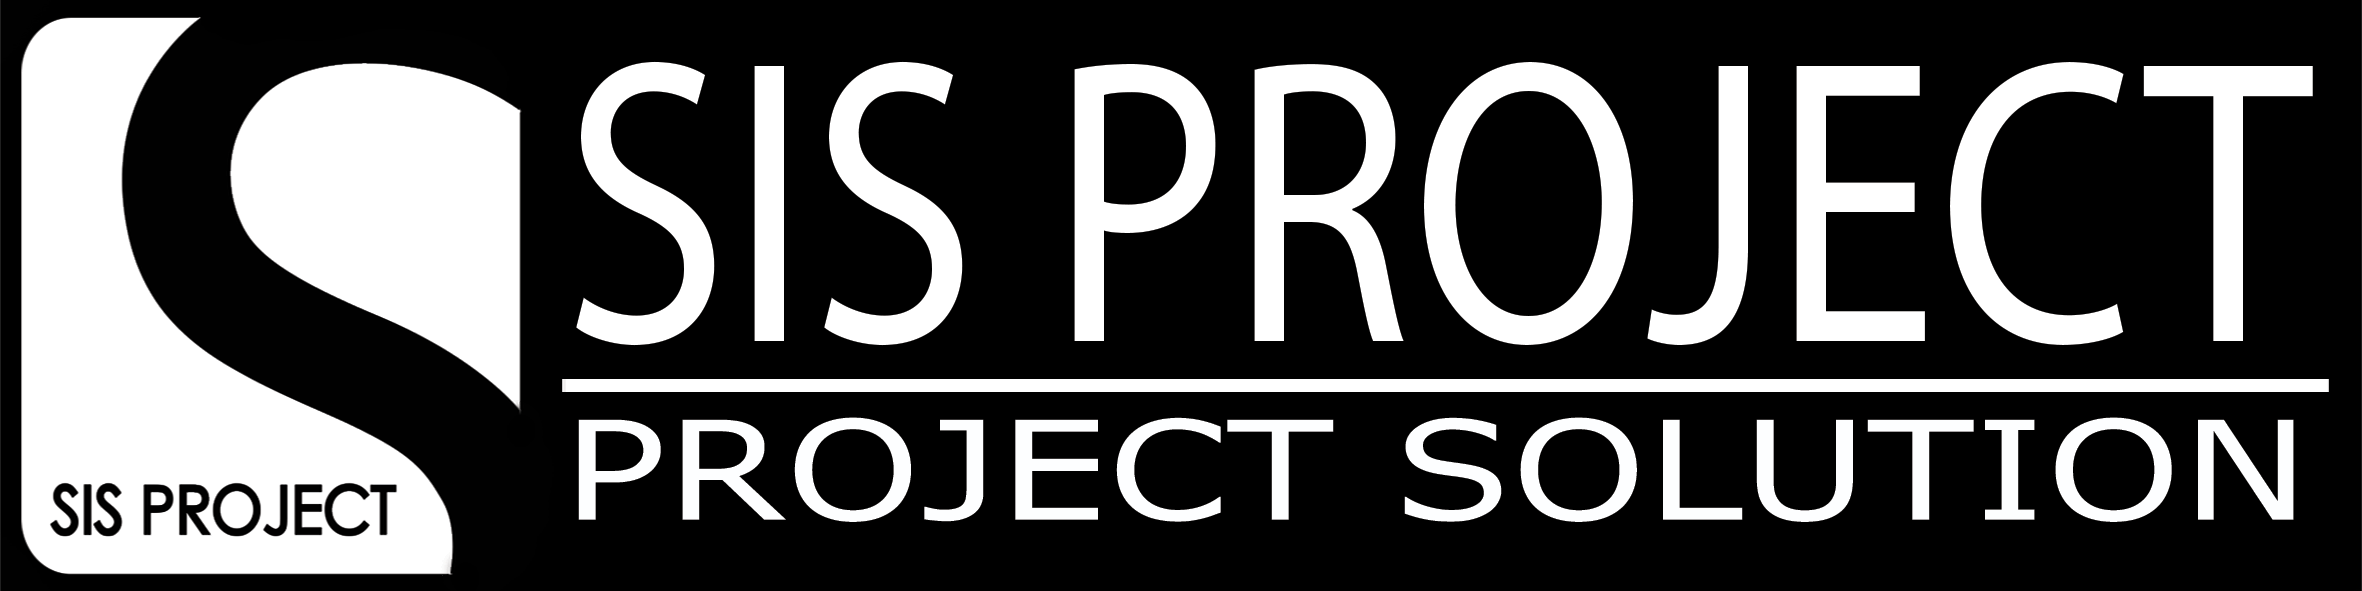 logo Sis Project Jsc.